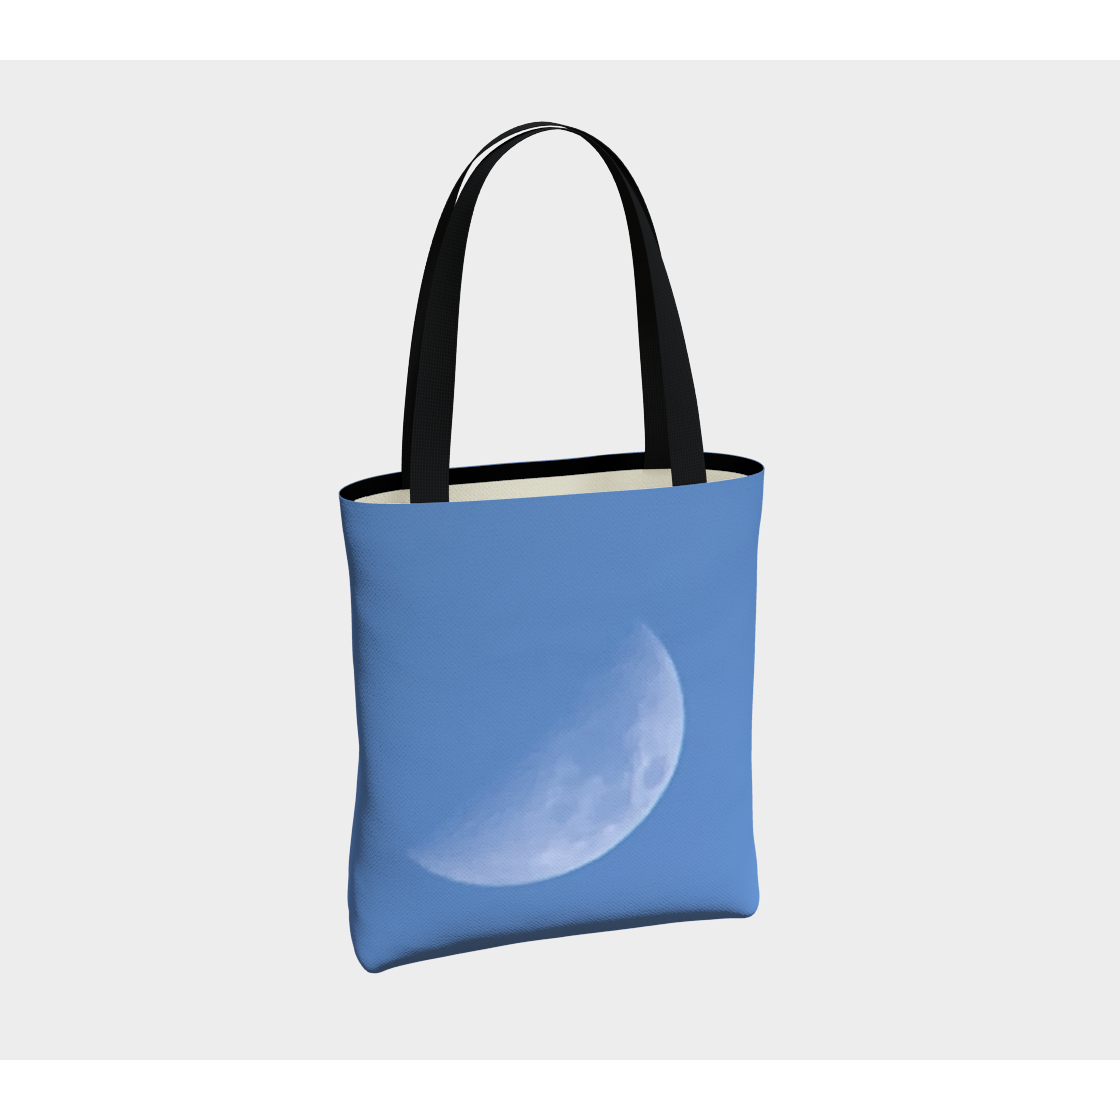 Tote Bag for Women with: Half Moon Design, Light Inside